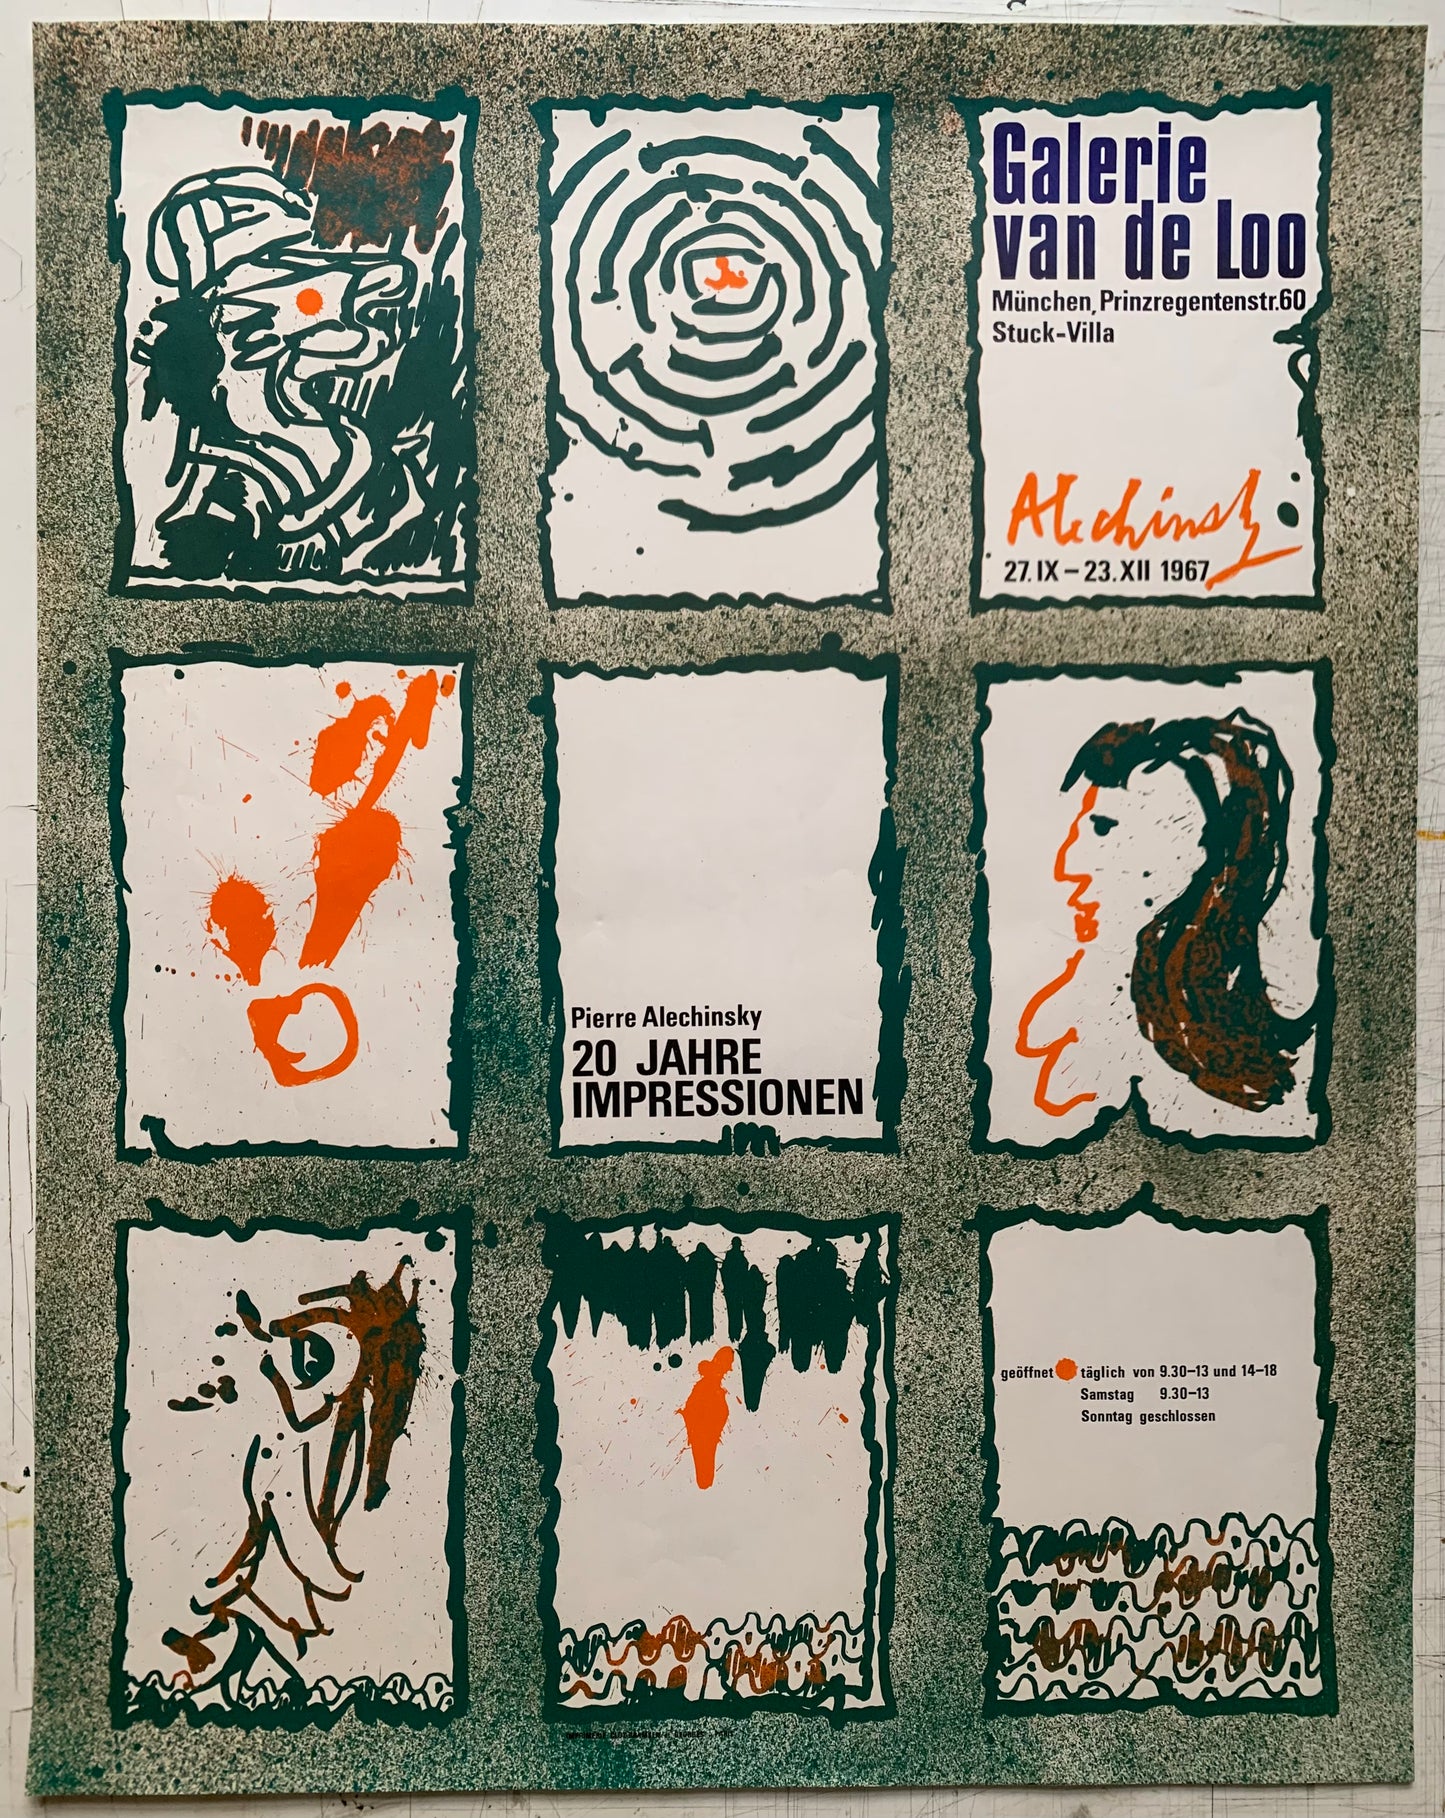 Pierre Alechinsky - exhibition poster, 1967